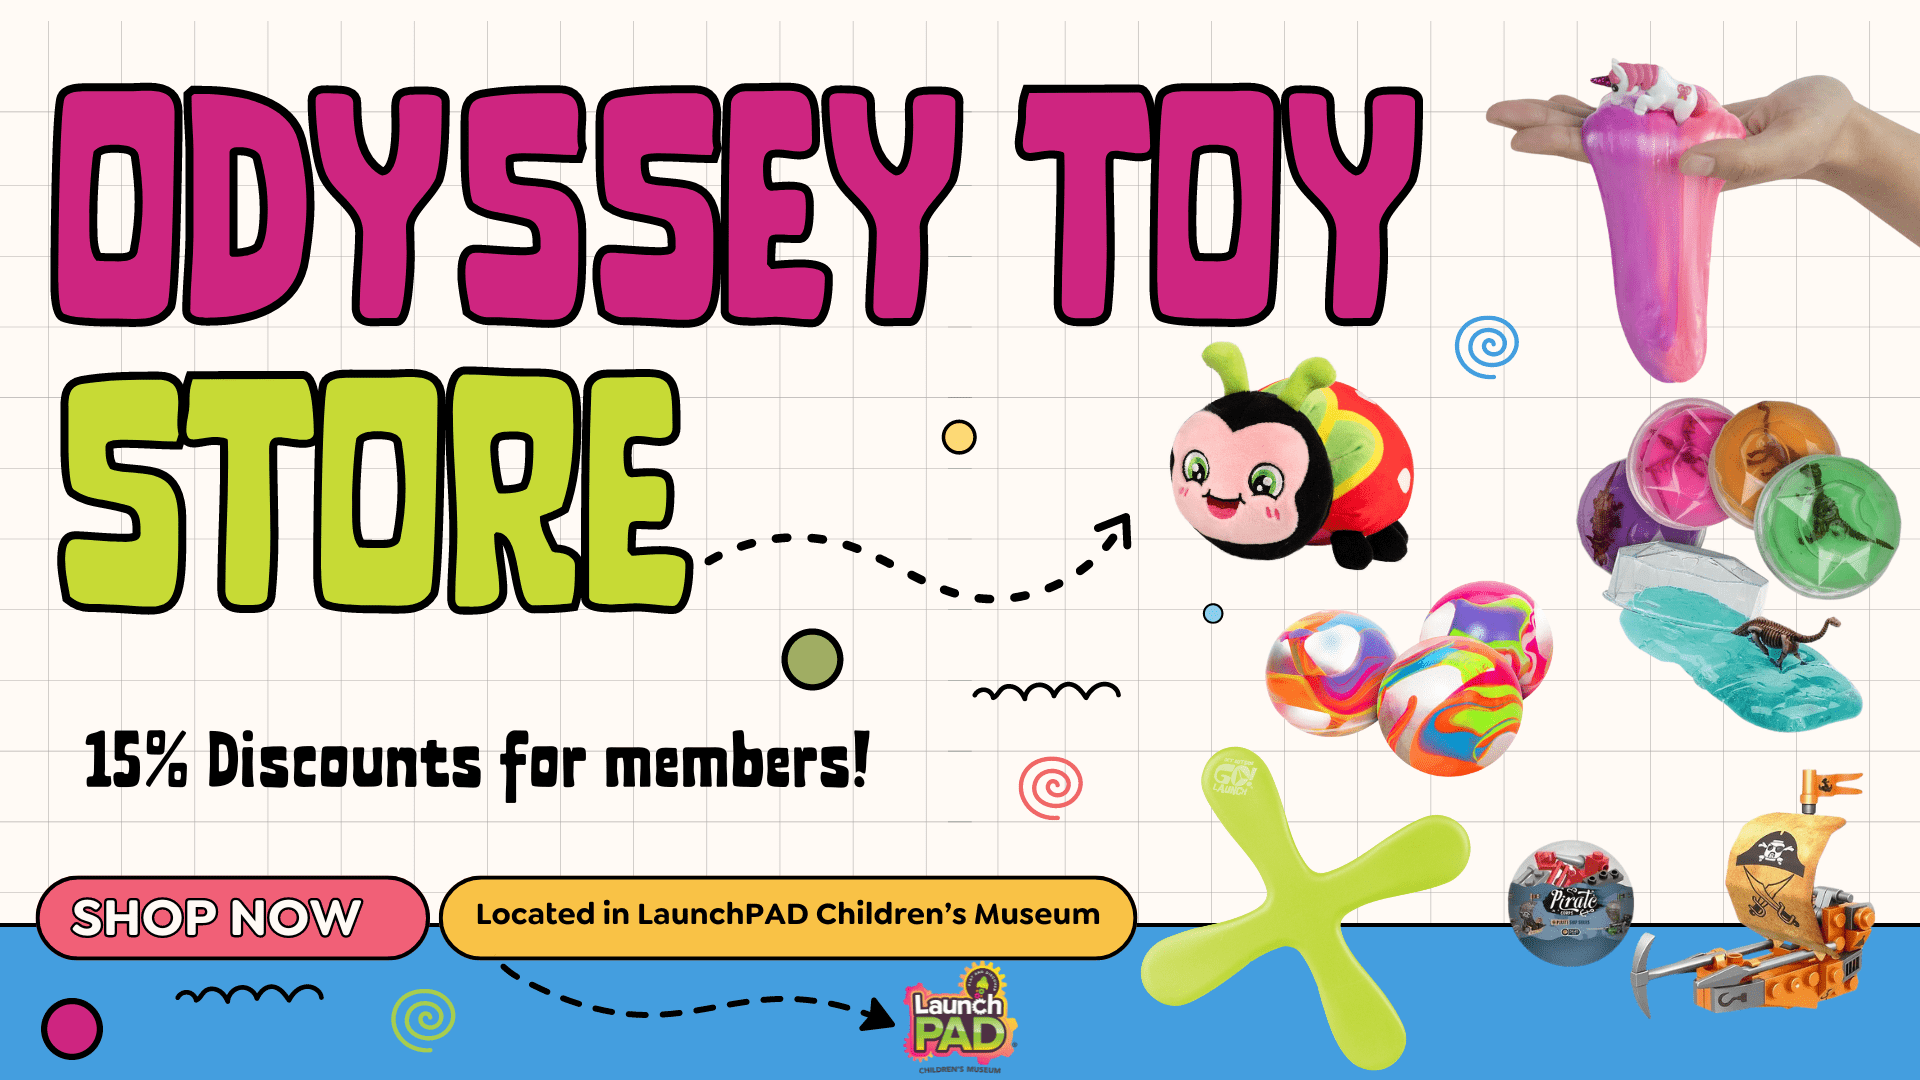 Odyssey Toy Store new